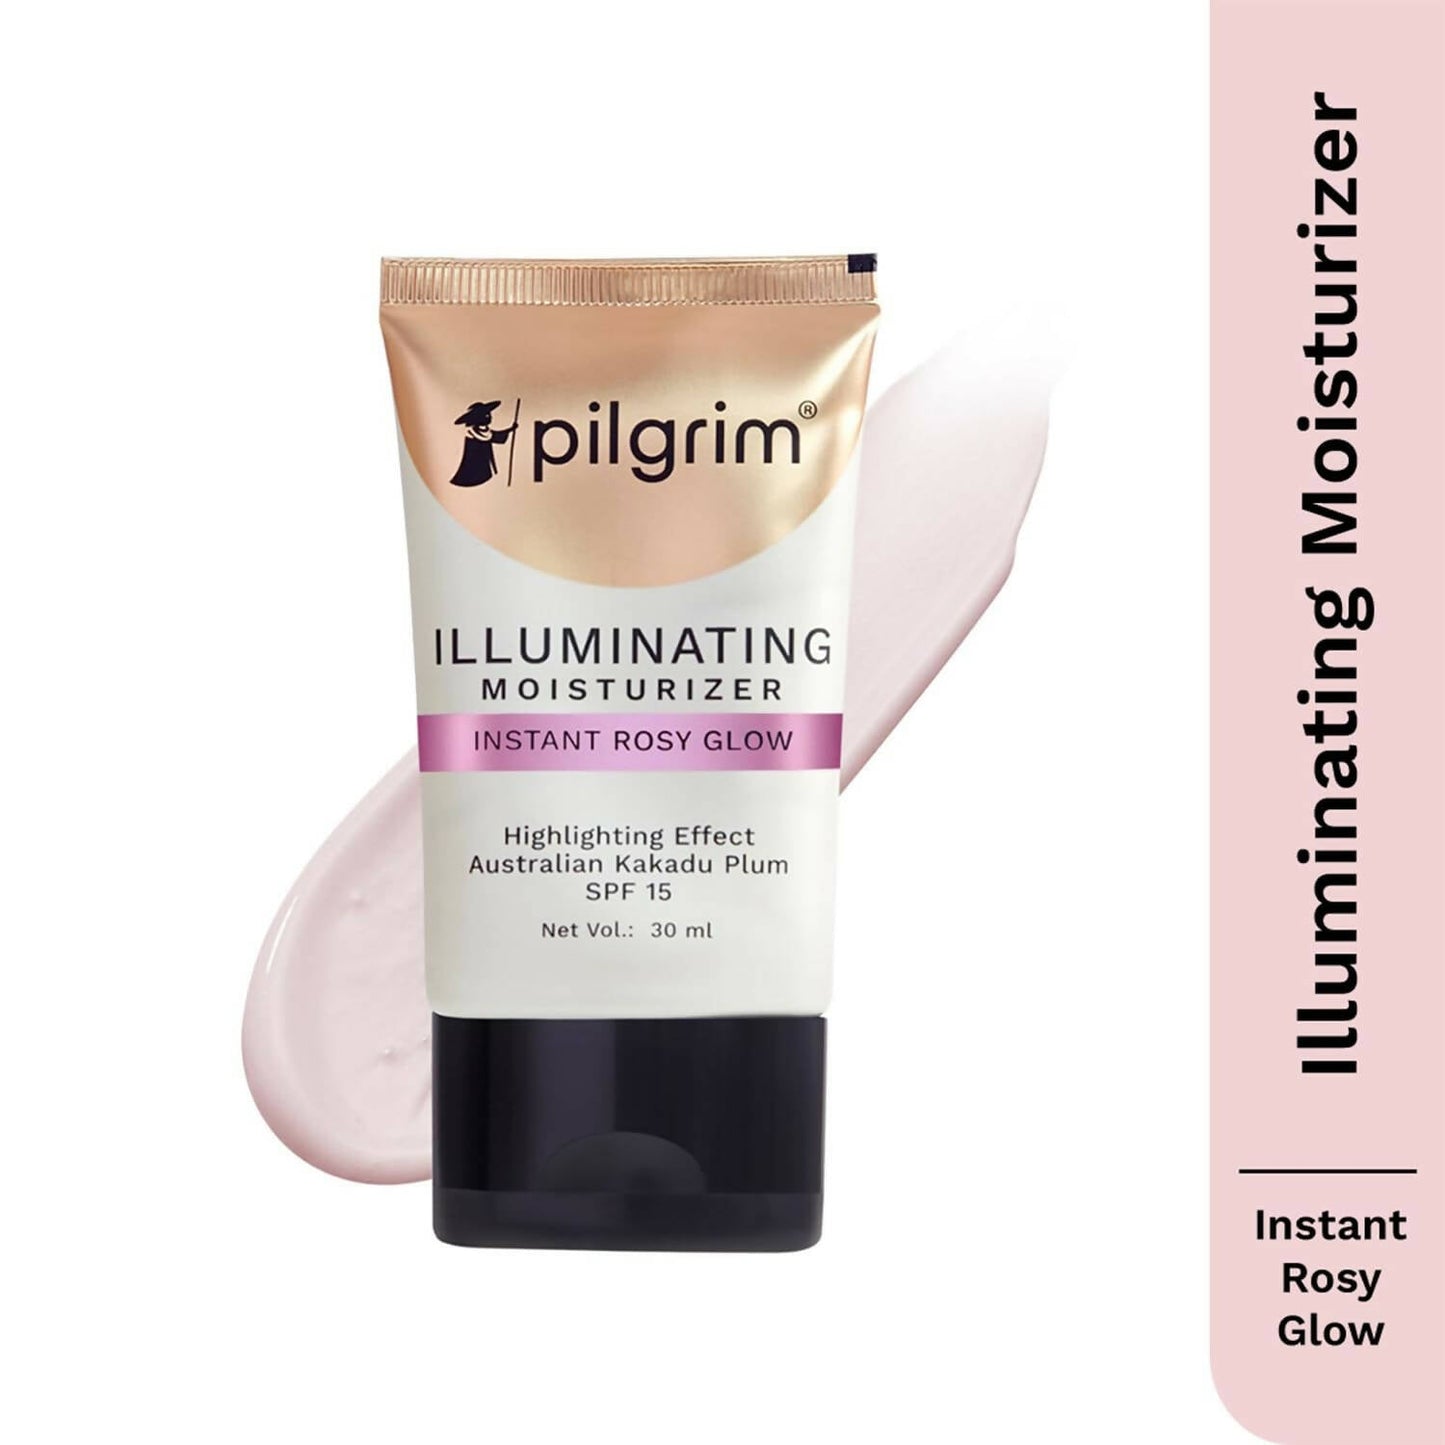 Pilgrim Illuminating Moisturizer For Instant Rosy Glow & SPF 15